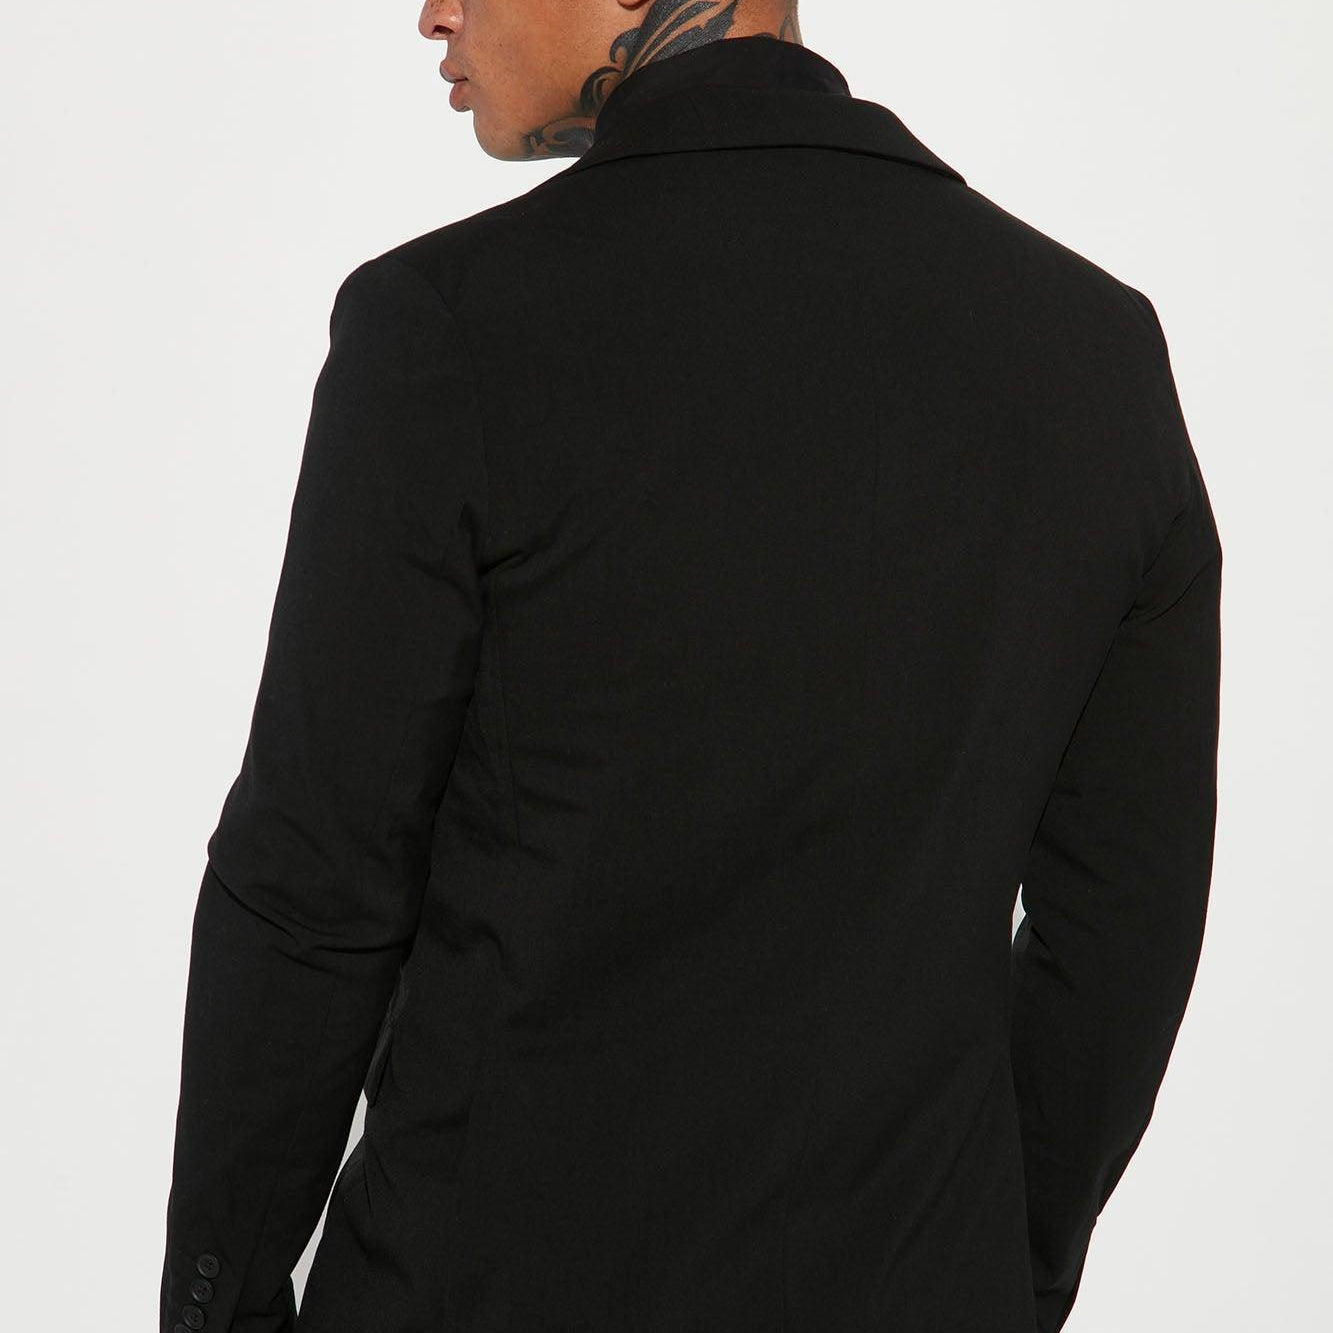 Men's Jackets - Blazers The Modern Stretch Suit Jacket - Black